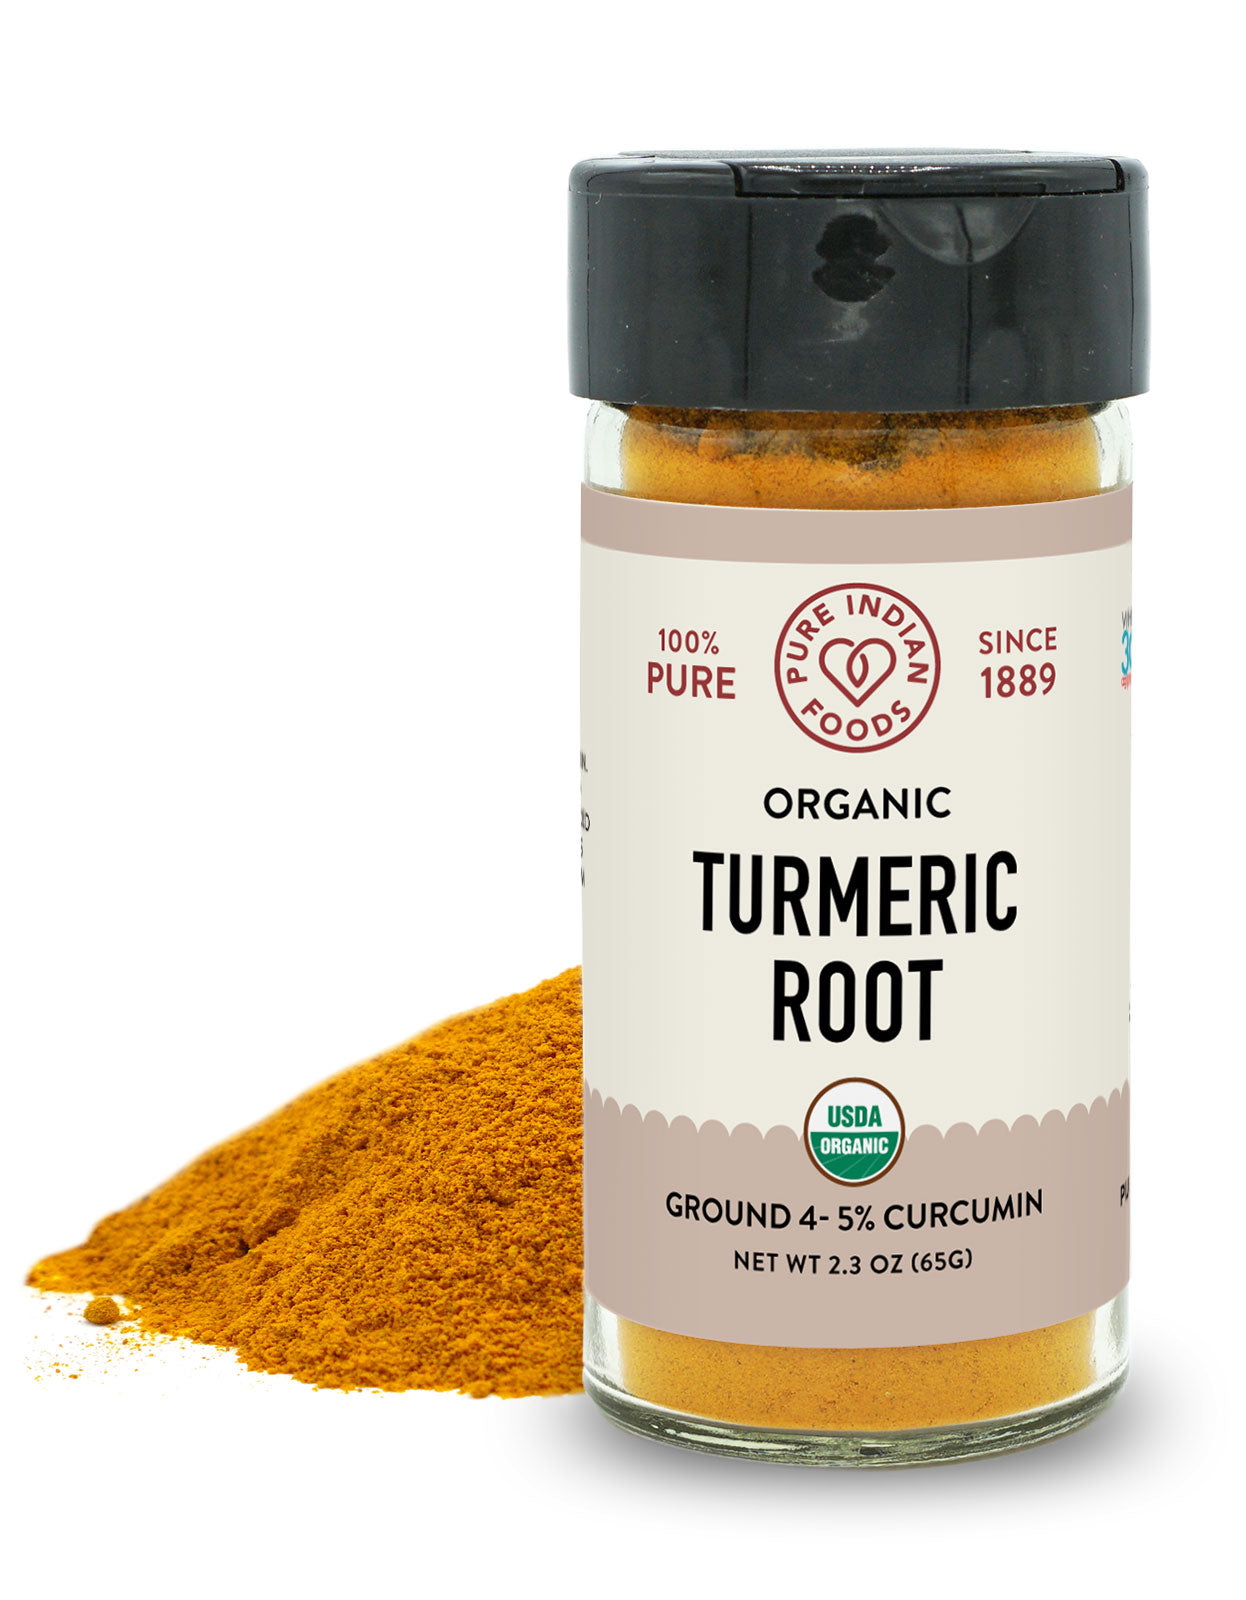 Jar of Pure Indian Foods Organic Tumeric Powder. Label says it's 100% pure turmeric powder, with 4-5% curcumin.